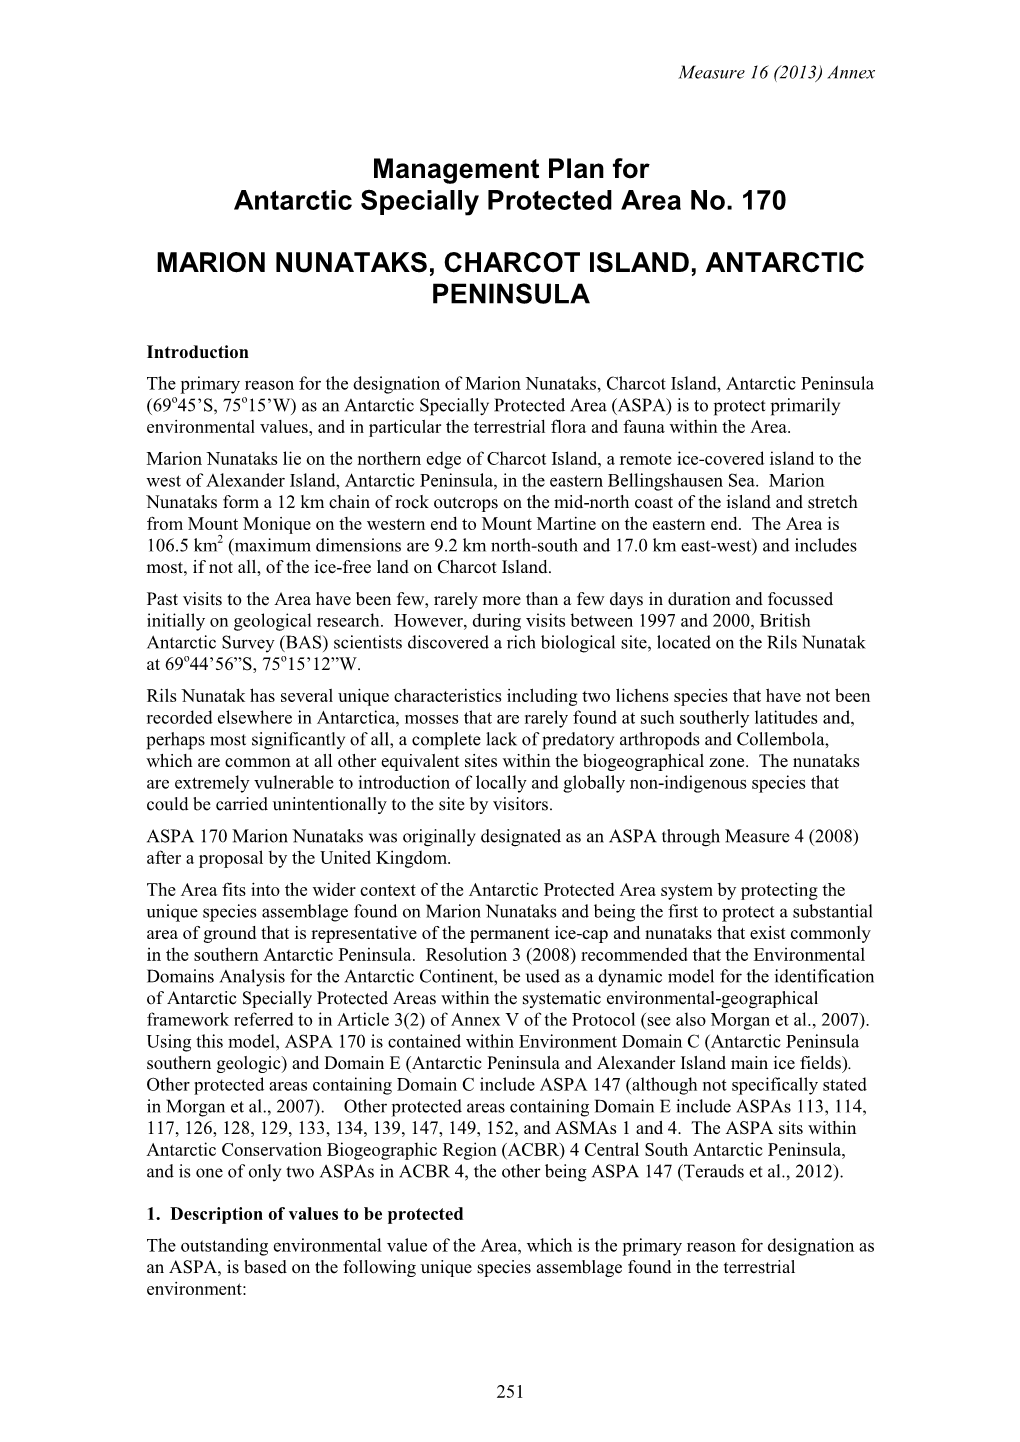 Marion Nunataks, Charcot Island, Antarctic Peninsula